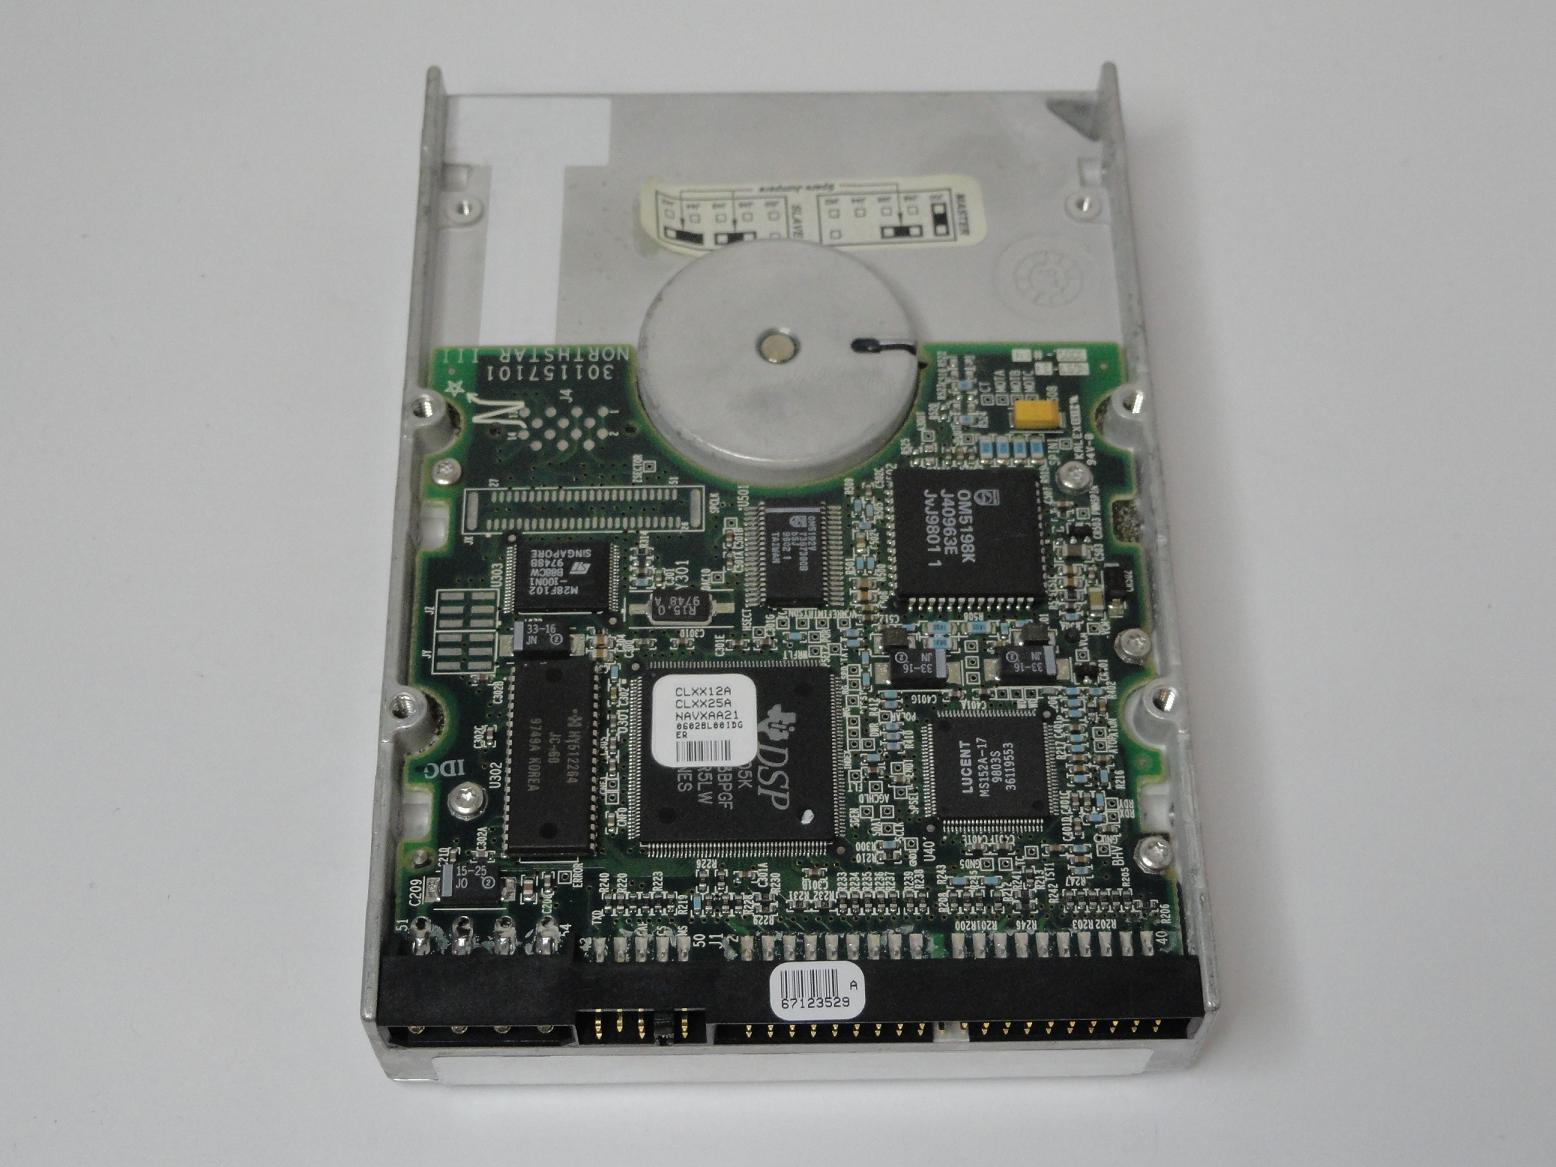 MC1917_82160D2_Maxtor IBM 2.1GB IDE 5200rpm 3.5in HDD - Image2